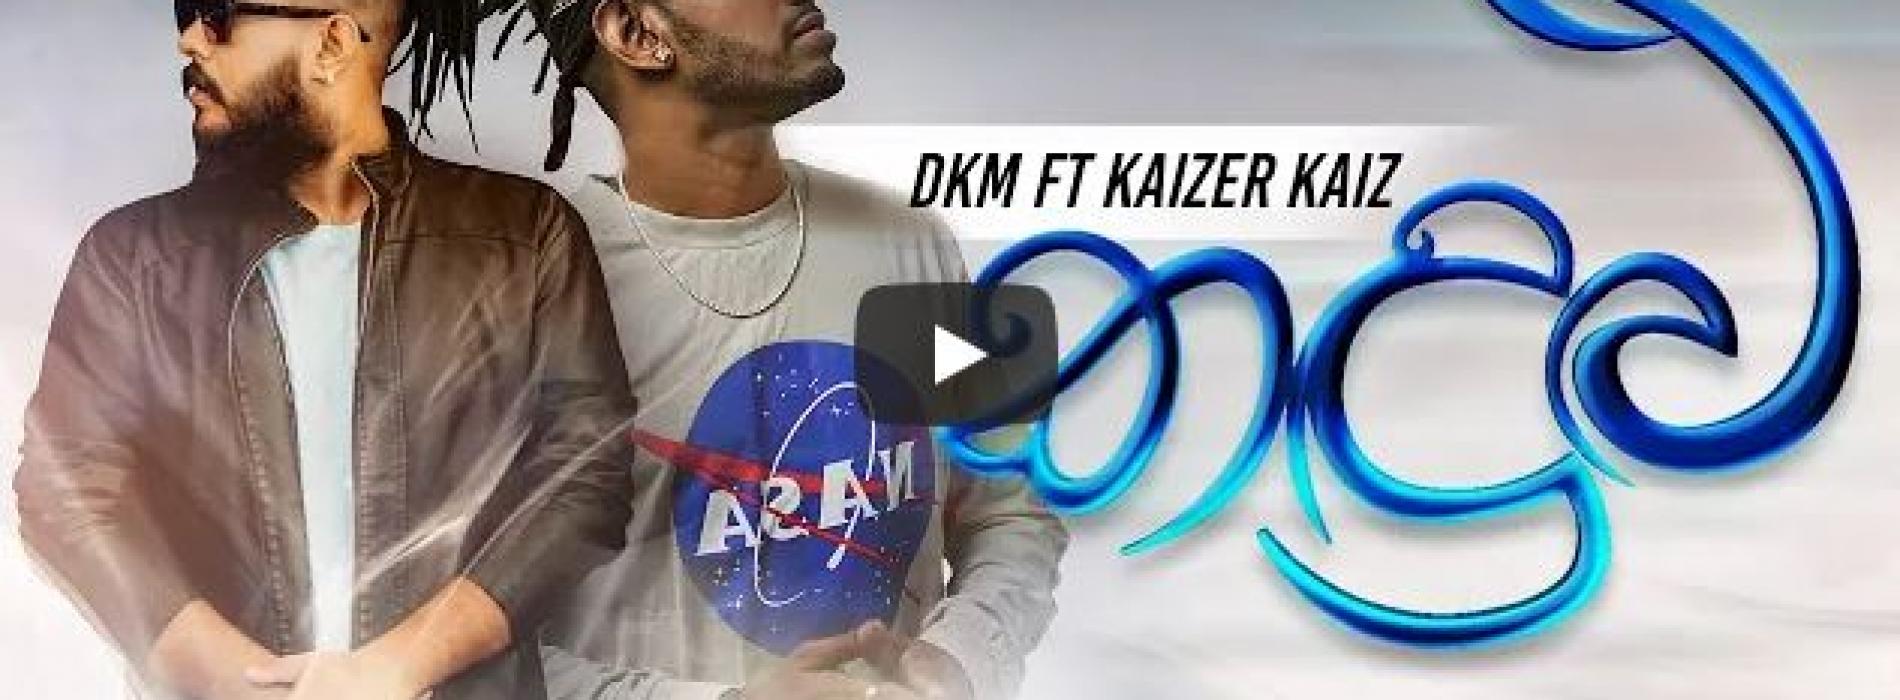 New Music : DKM ft @Kaizer Kaiz – Kandulu | කදුළු (Official Visualizer)